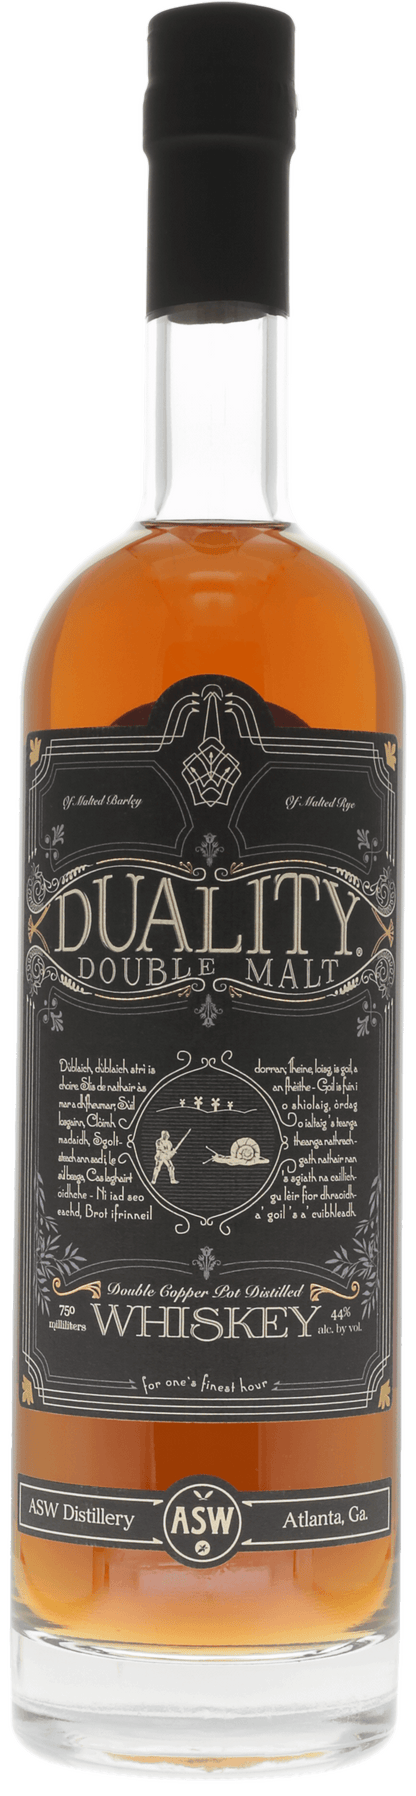 Duality Double Malt Whiskey